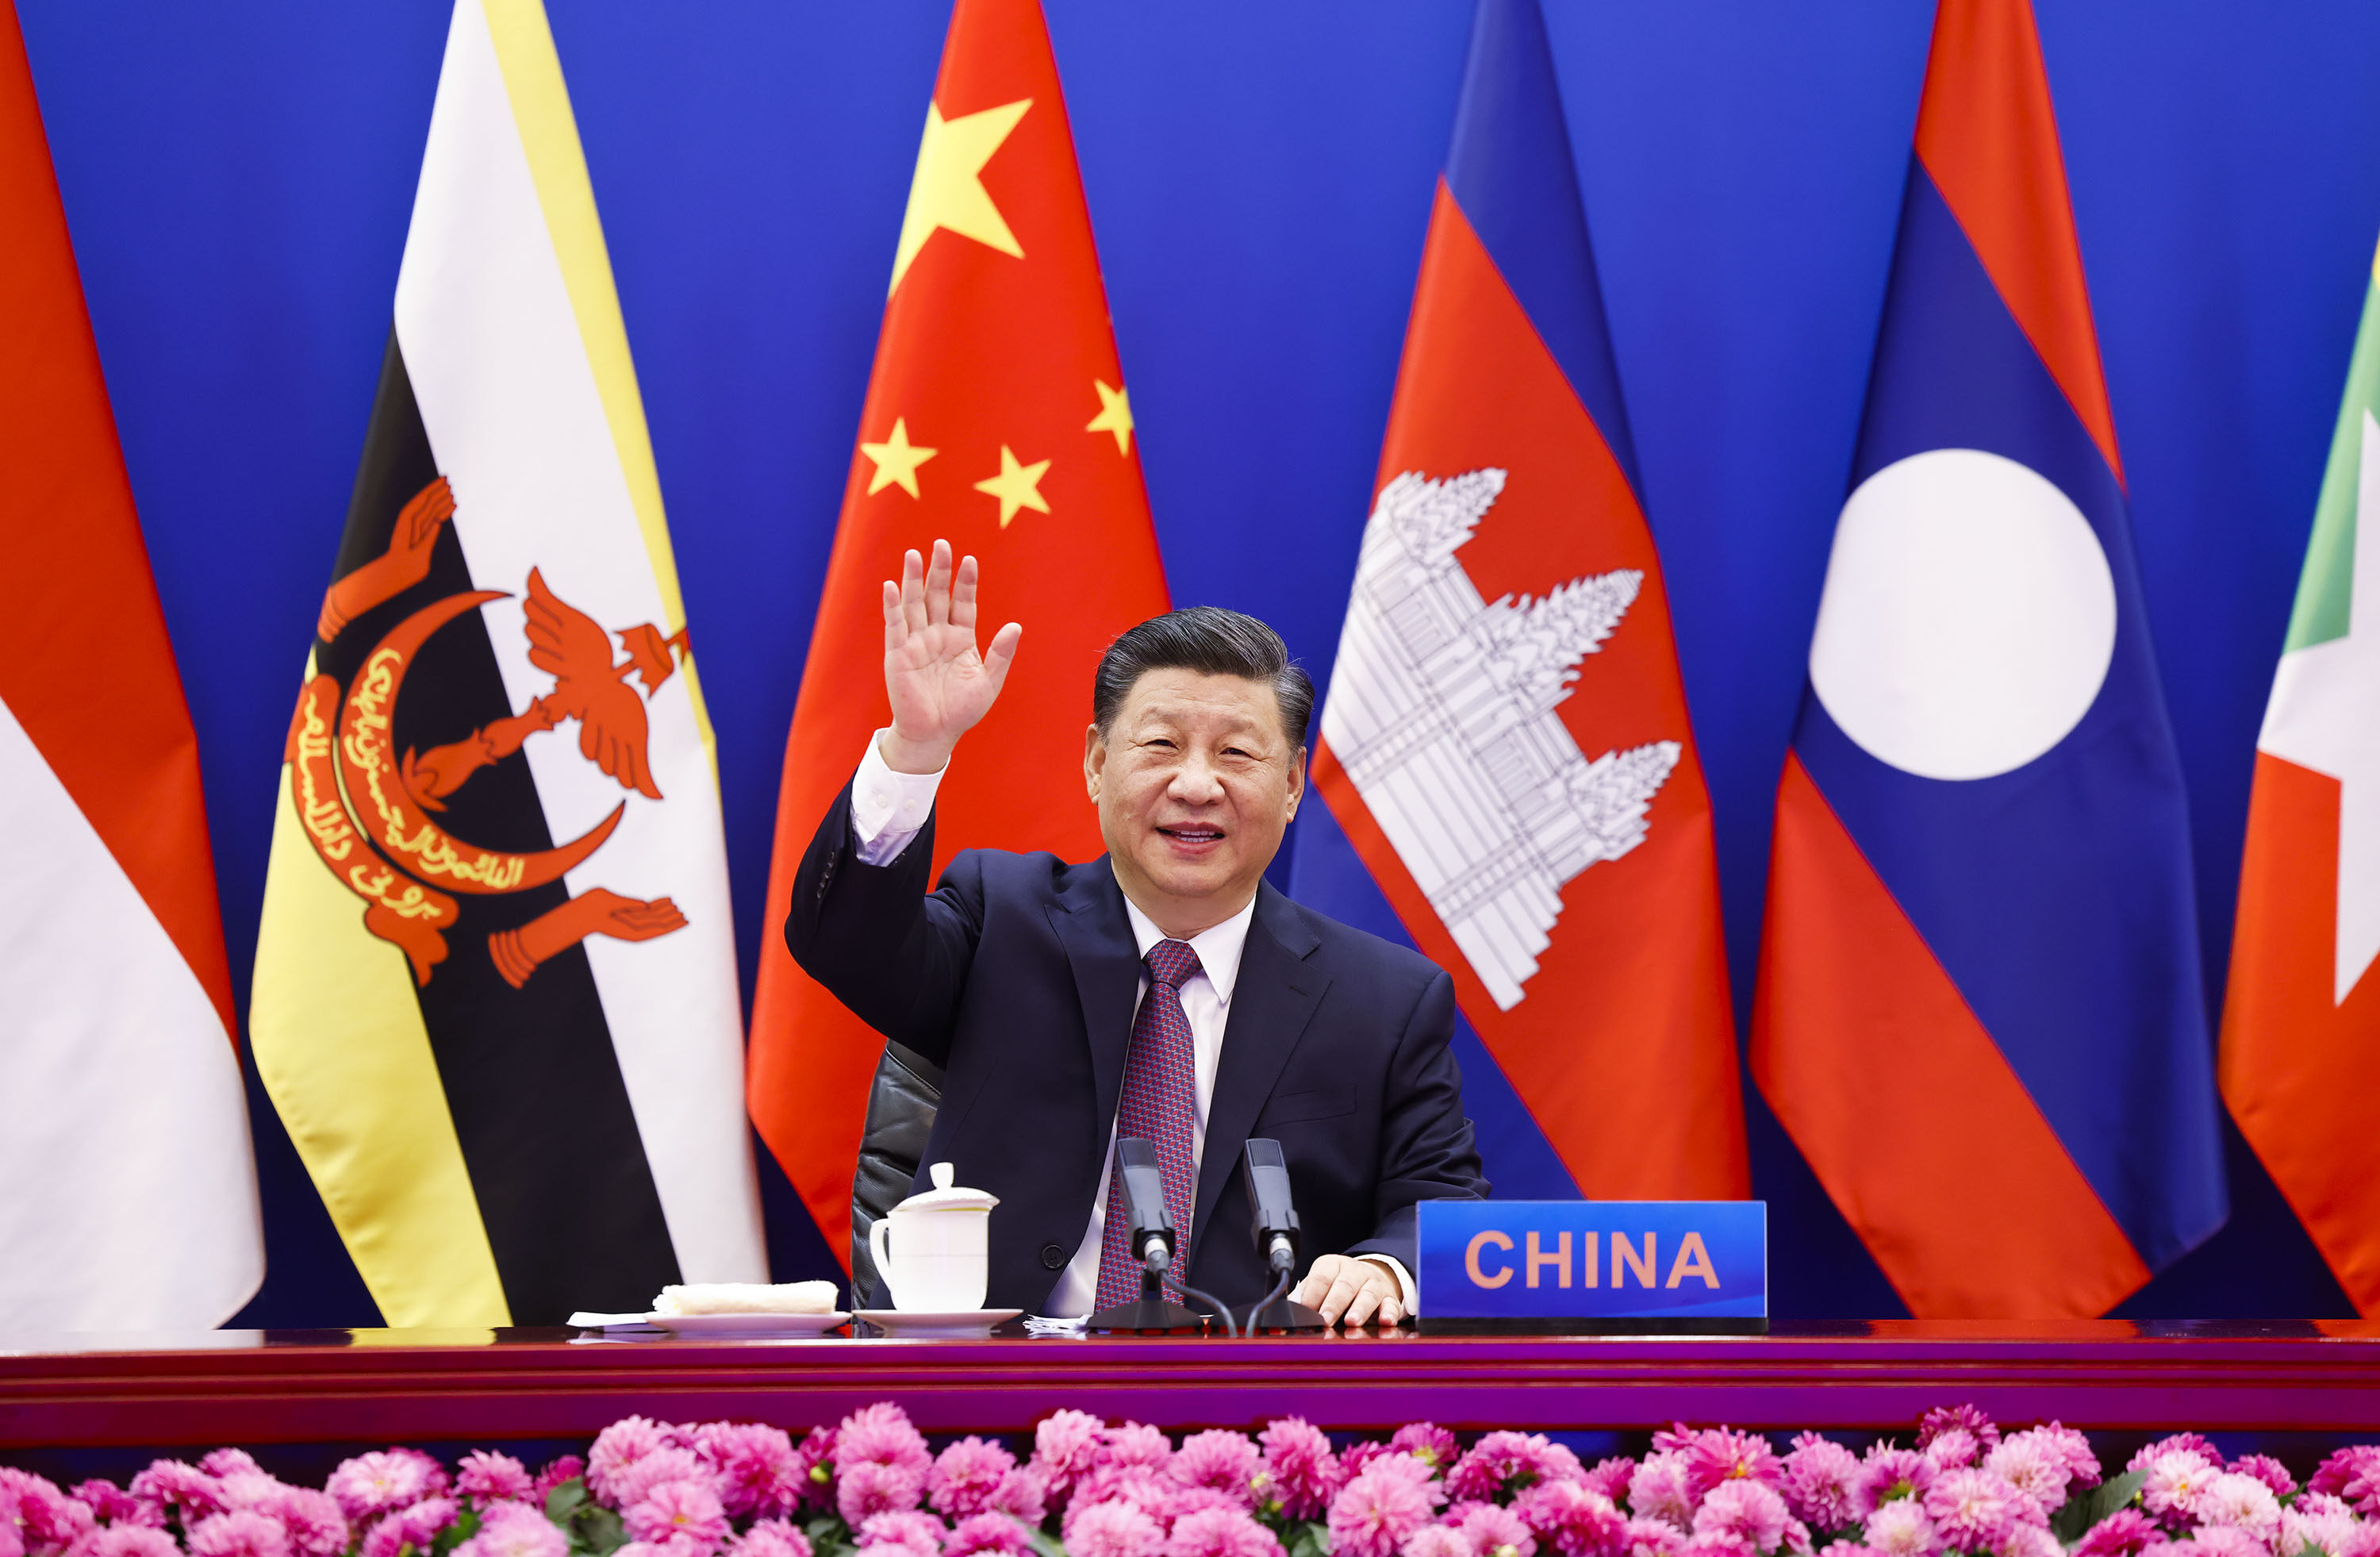 Chinese President Xi Jinping chairs the ASEAN-China Special Summit via video link in Beijing, in November 2021.
Photo: Xinhua/Huang Jingwen